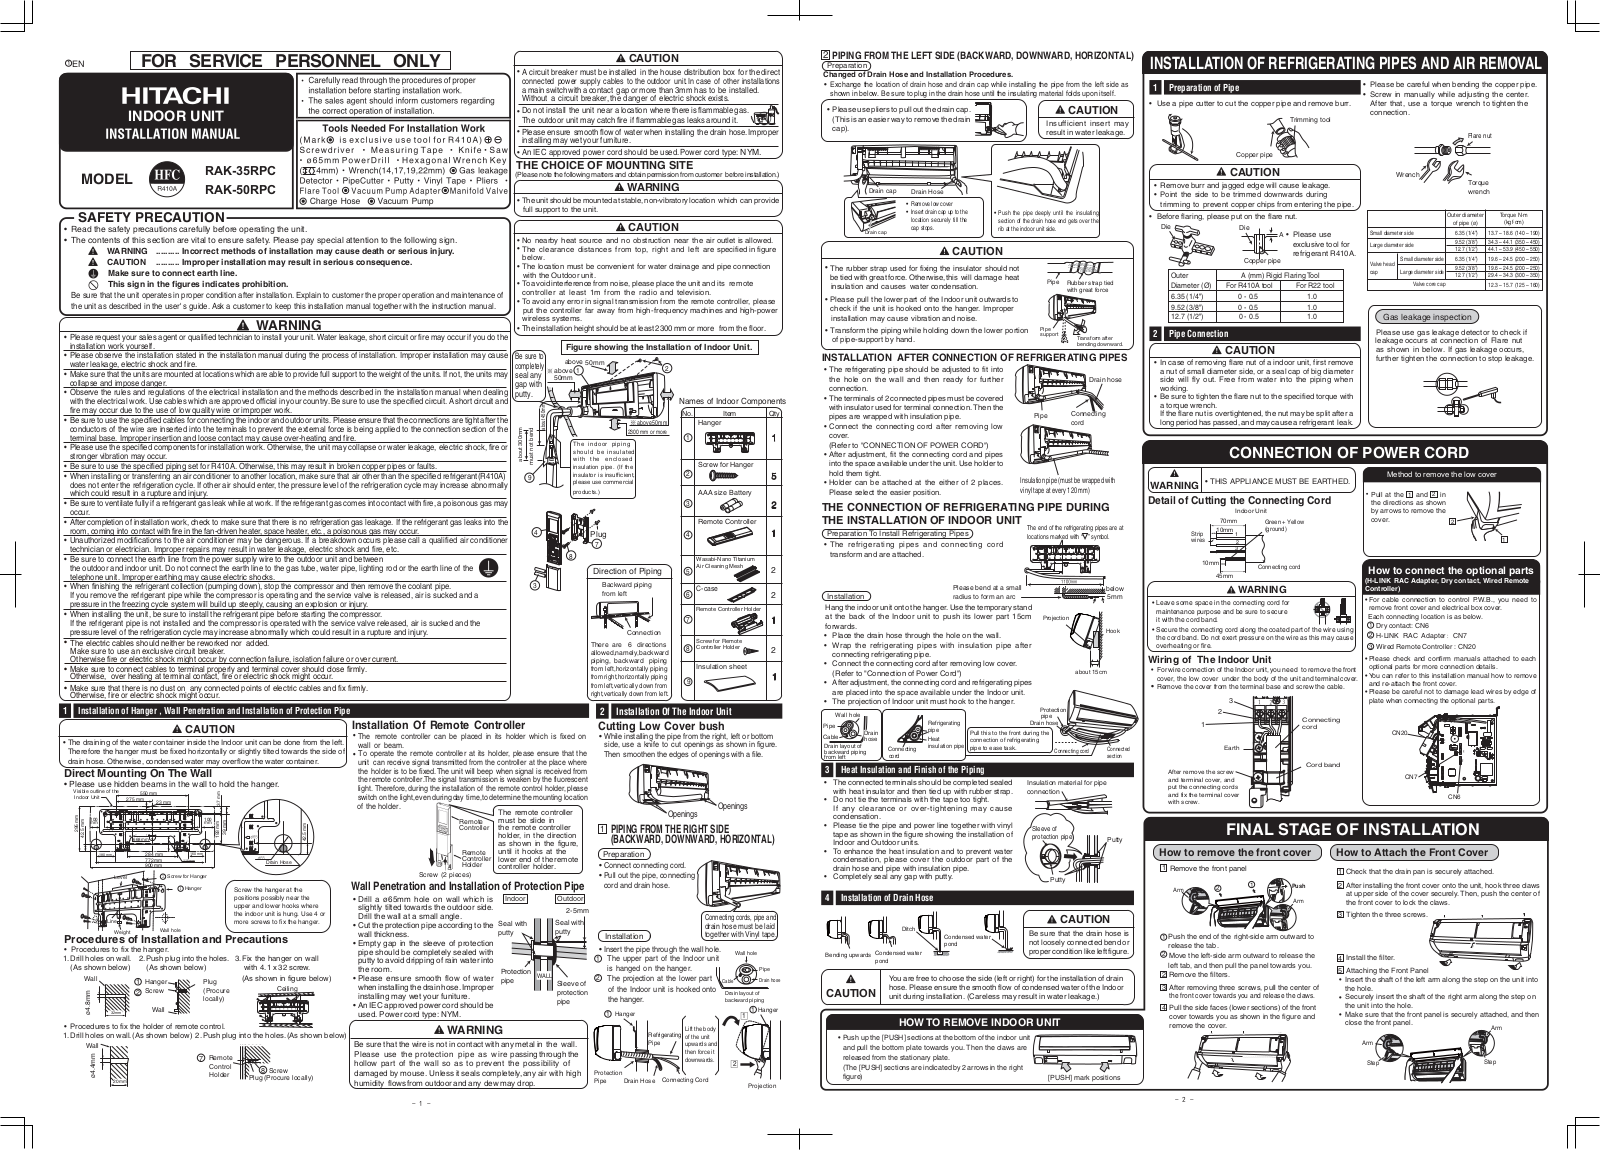 Hitachi RAK-35RPC, RAK-50RPC Installation manual